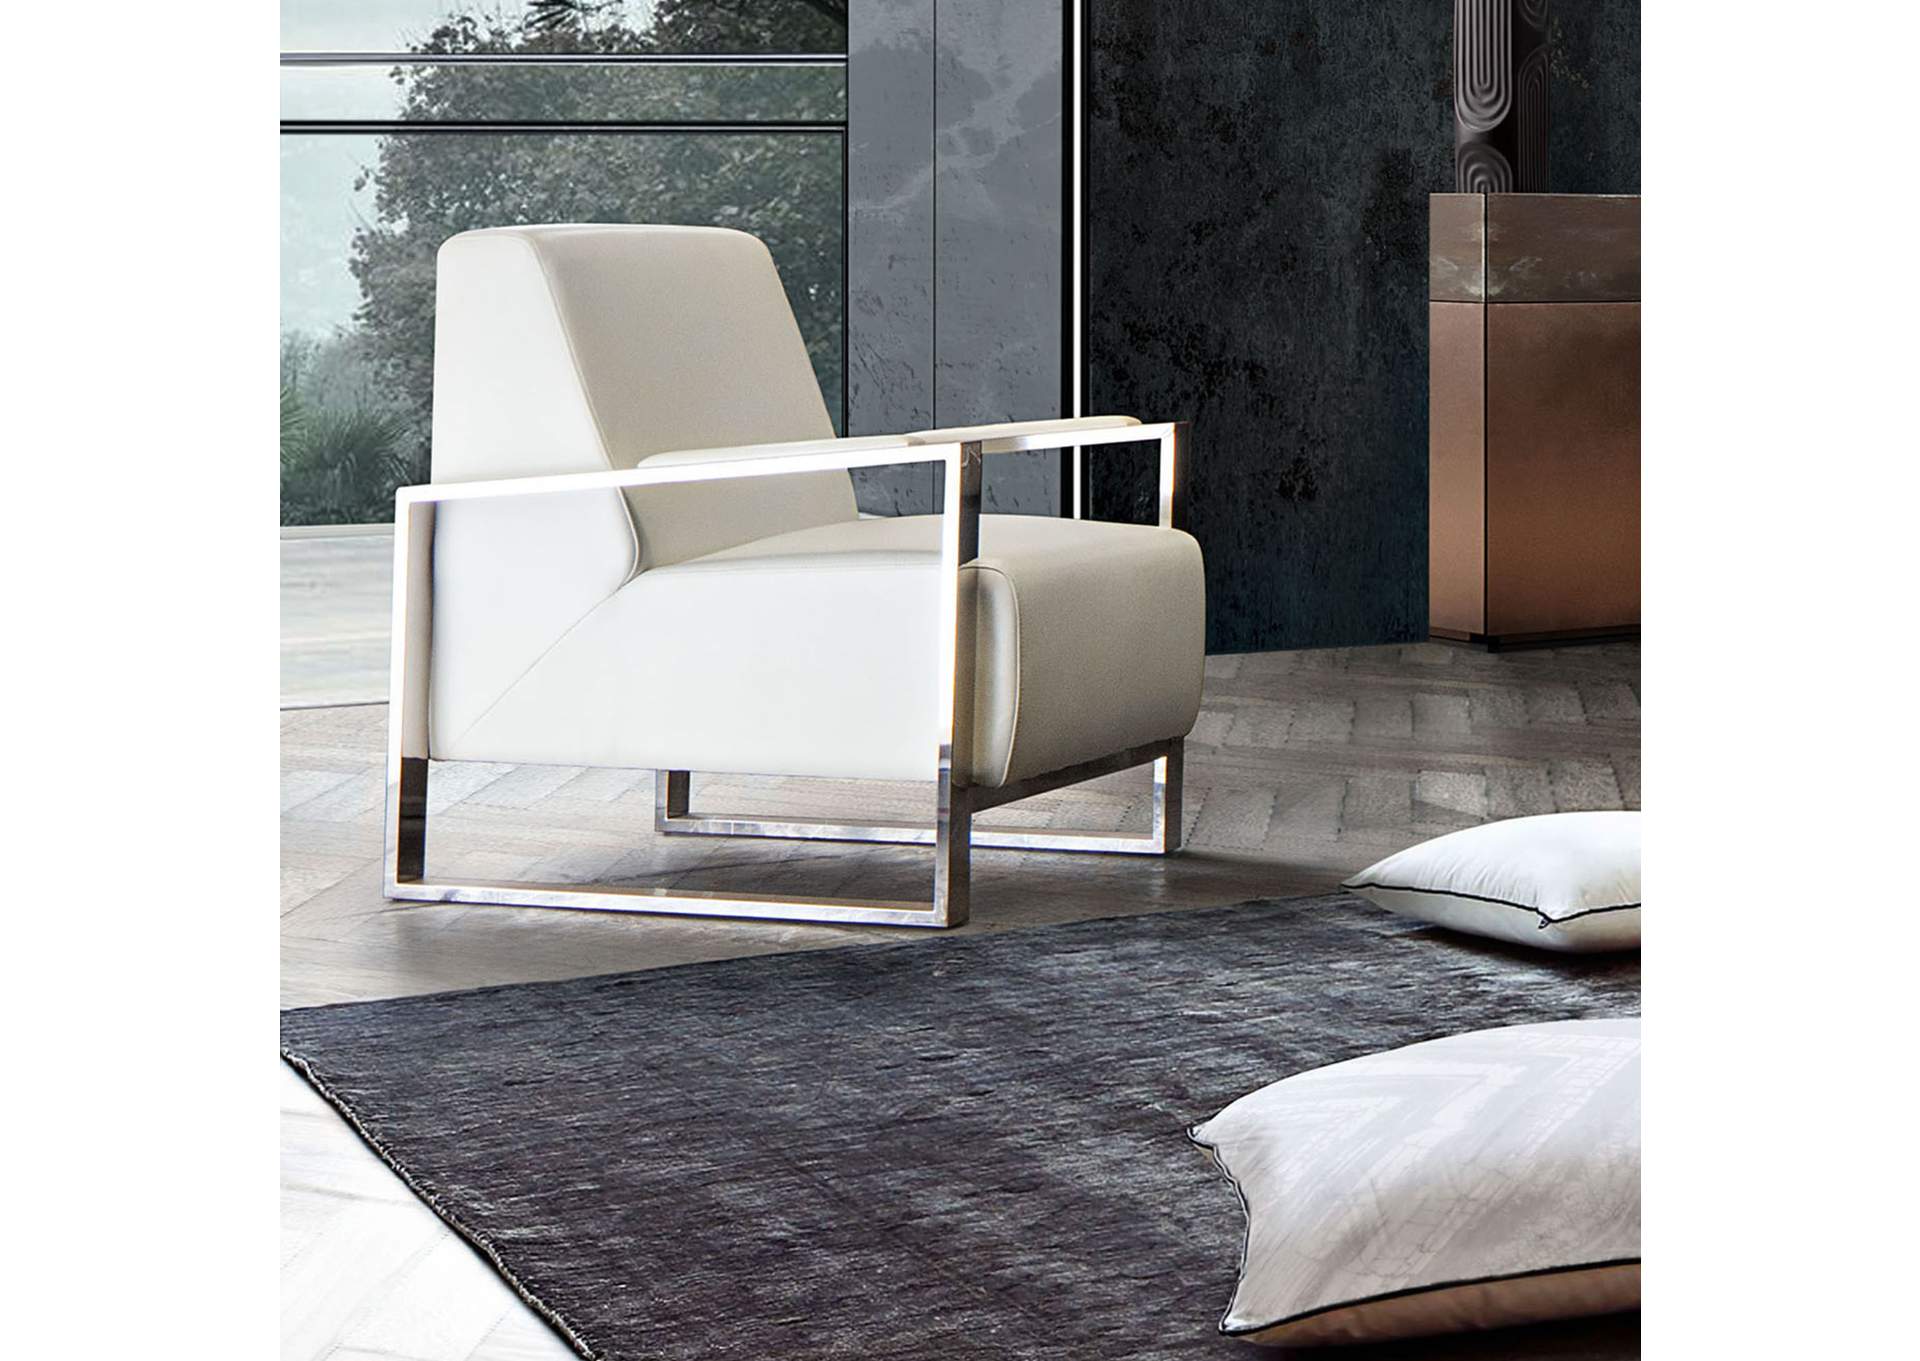 Century Accent Chair w/ Stainless Steel Frame by Diamond Sofa - White,Diamond Sofa